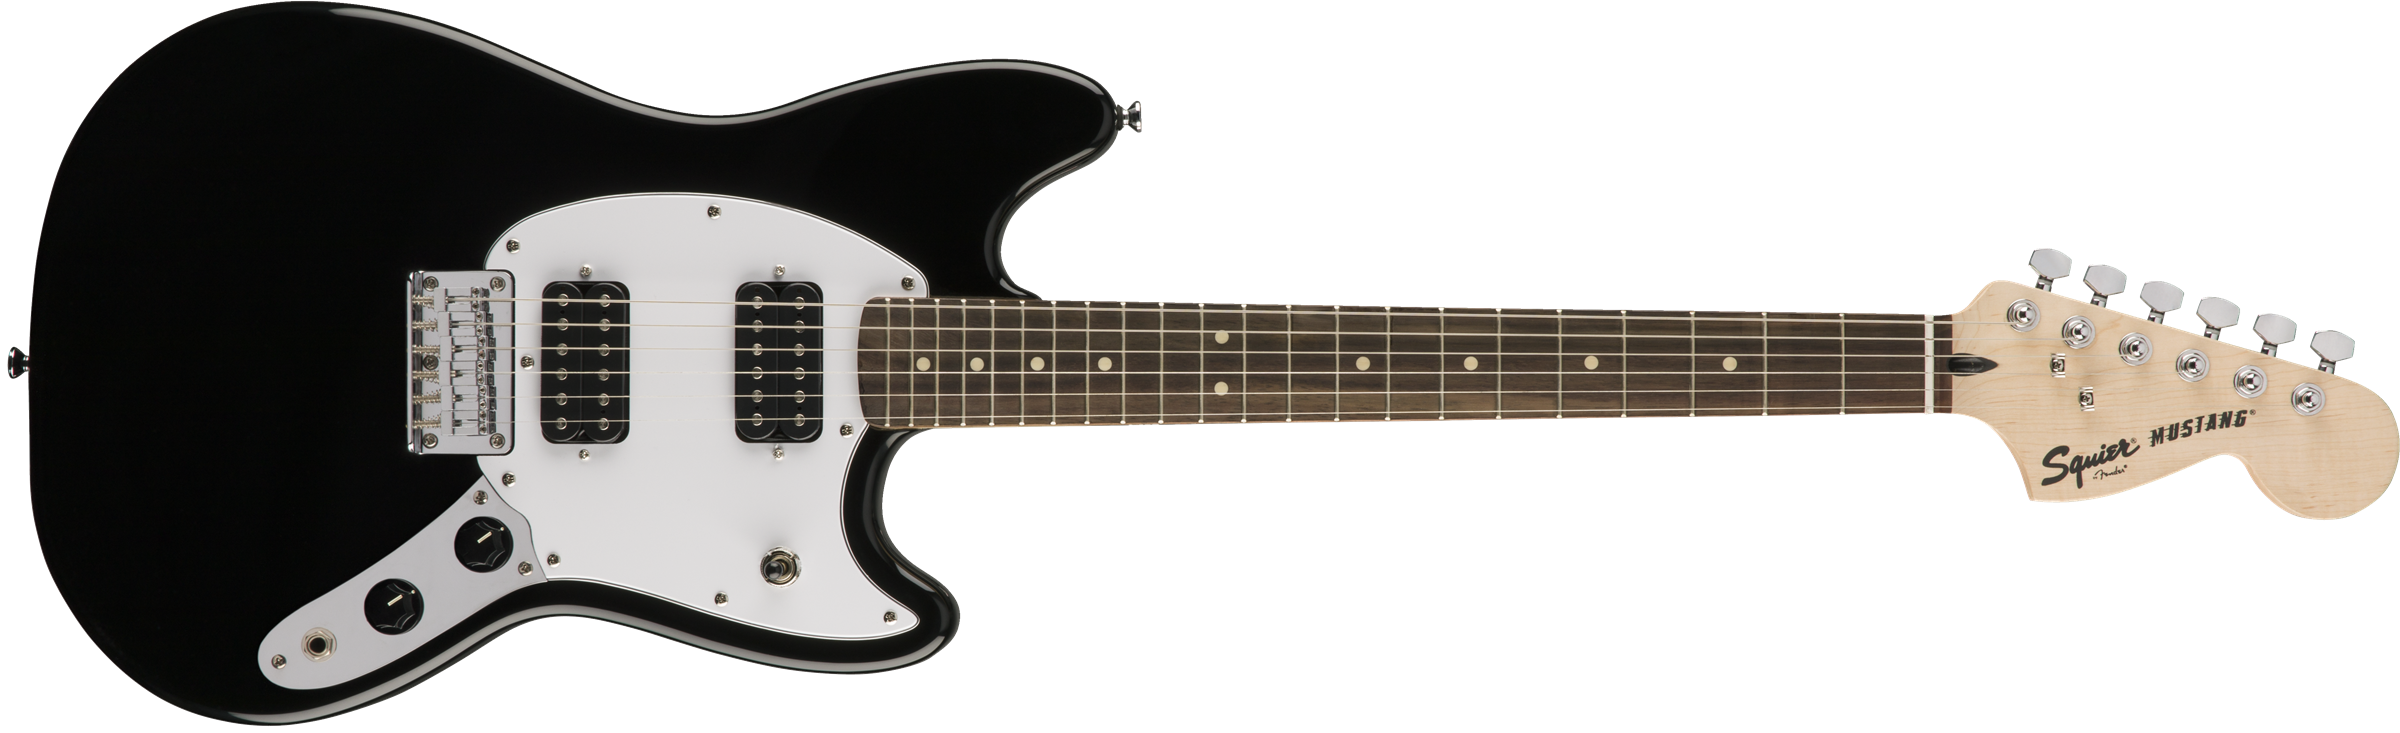 Squier Mustang Bullet Hh 2019 Ht Lau - Black - Retro rock electric guitar - Variation 1